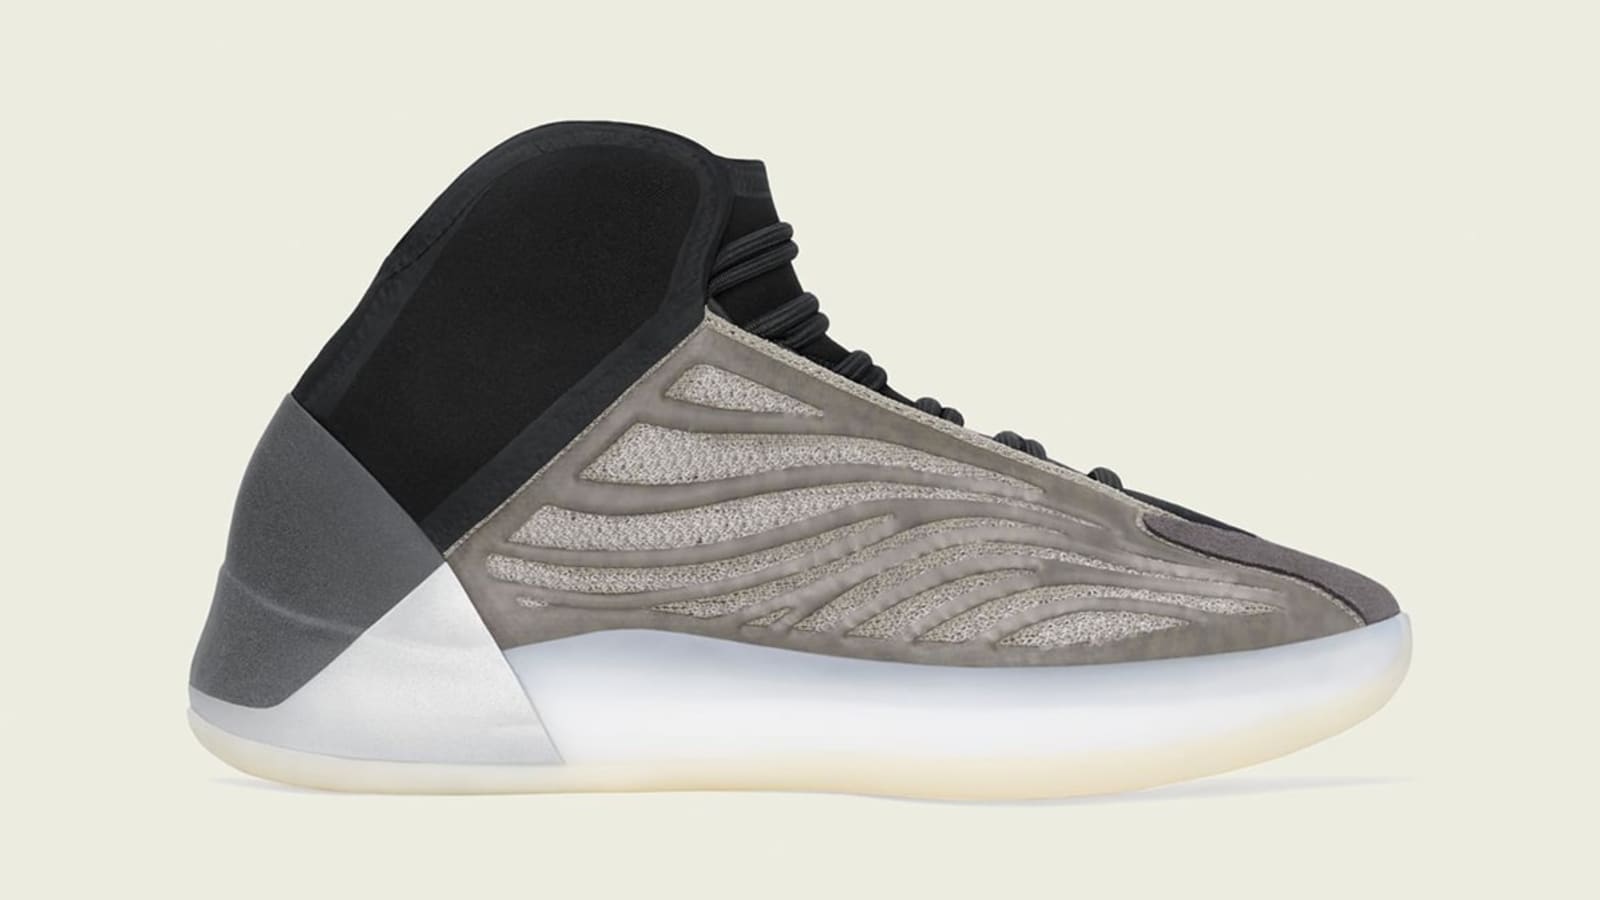 Kanye West's Next Yeezy Basketball Shoe Officially Revealed